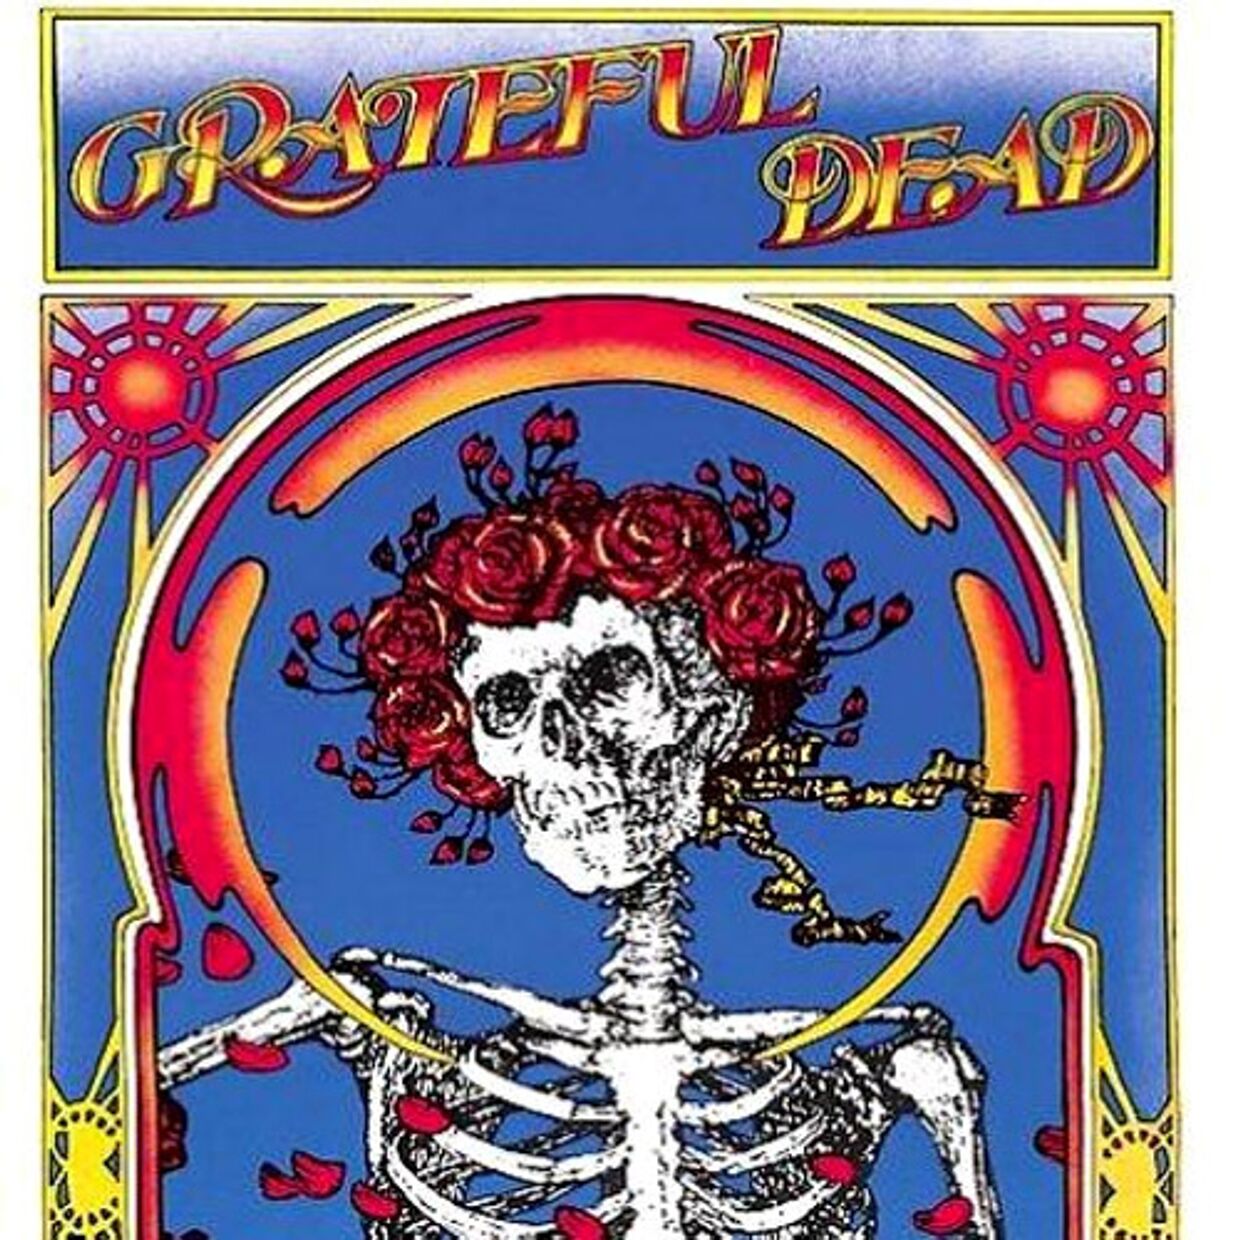 Альбом «Skull and Roses» группы Grateful Dead